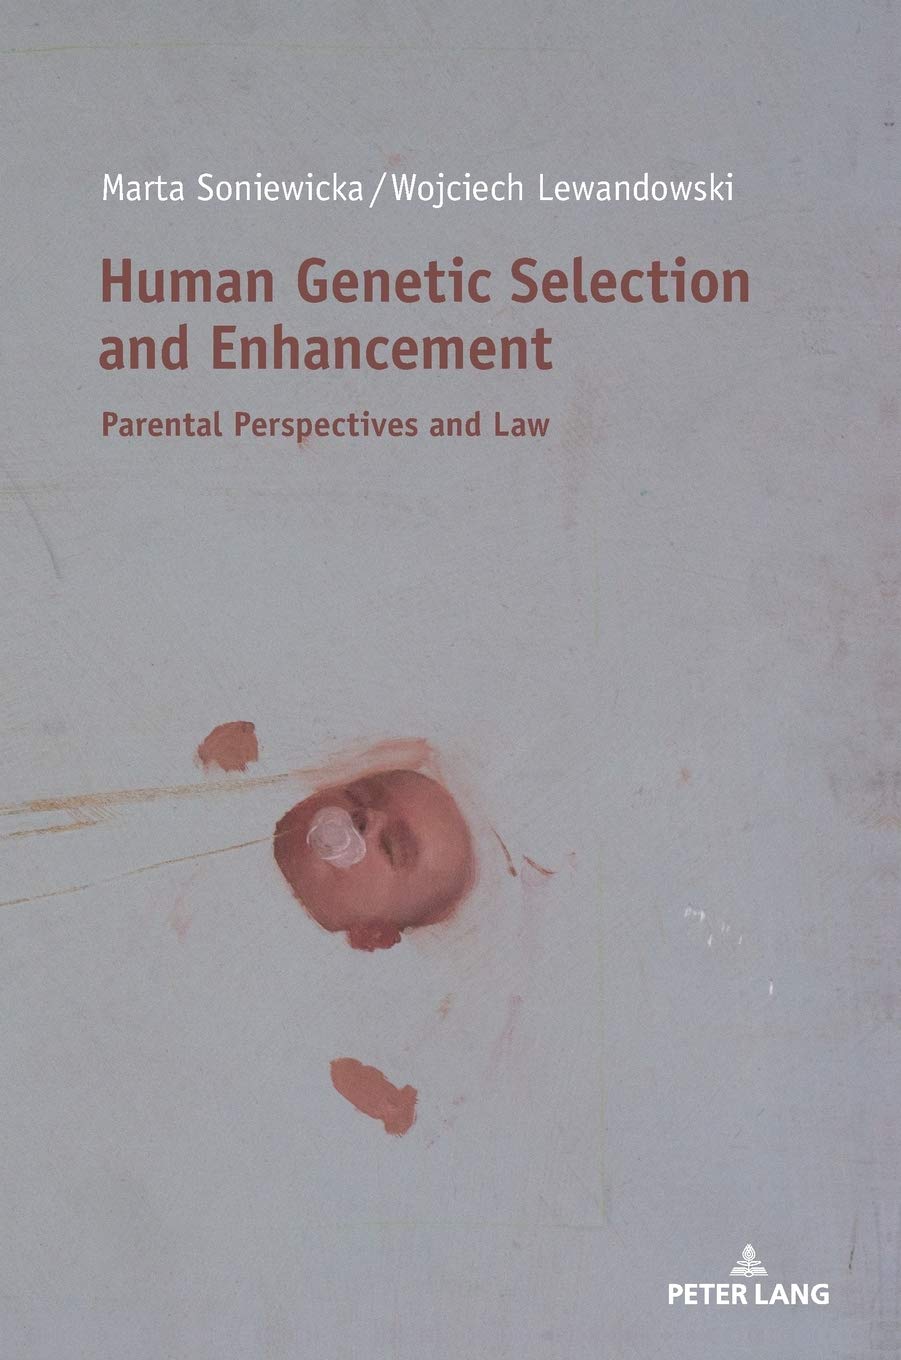 Human Genetic Selection and Enhancement. Parental Perspectives and Law, Marta Soniewicka, Wojciech Lewandowski